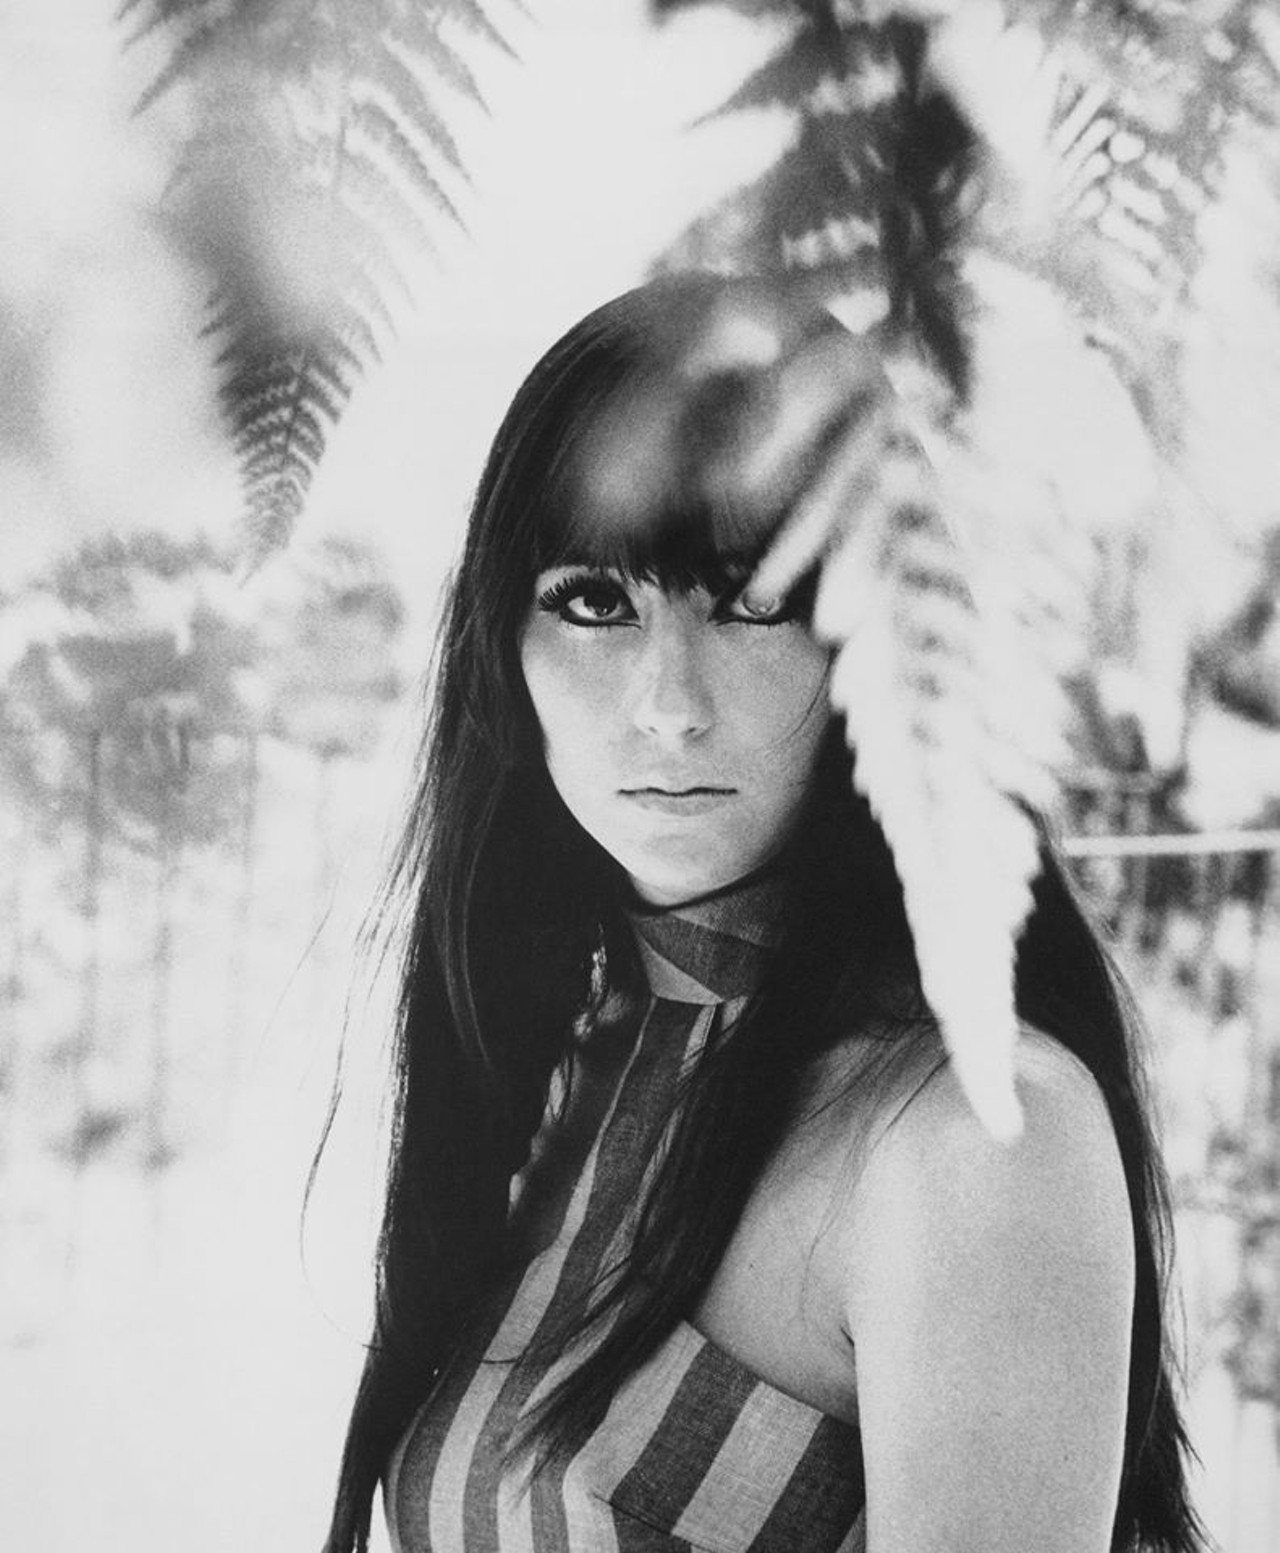 Brooding Cher. Succumb to her stare.
Photo via Facebook / Cher